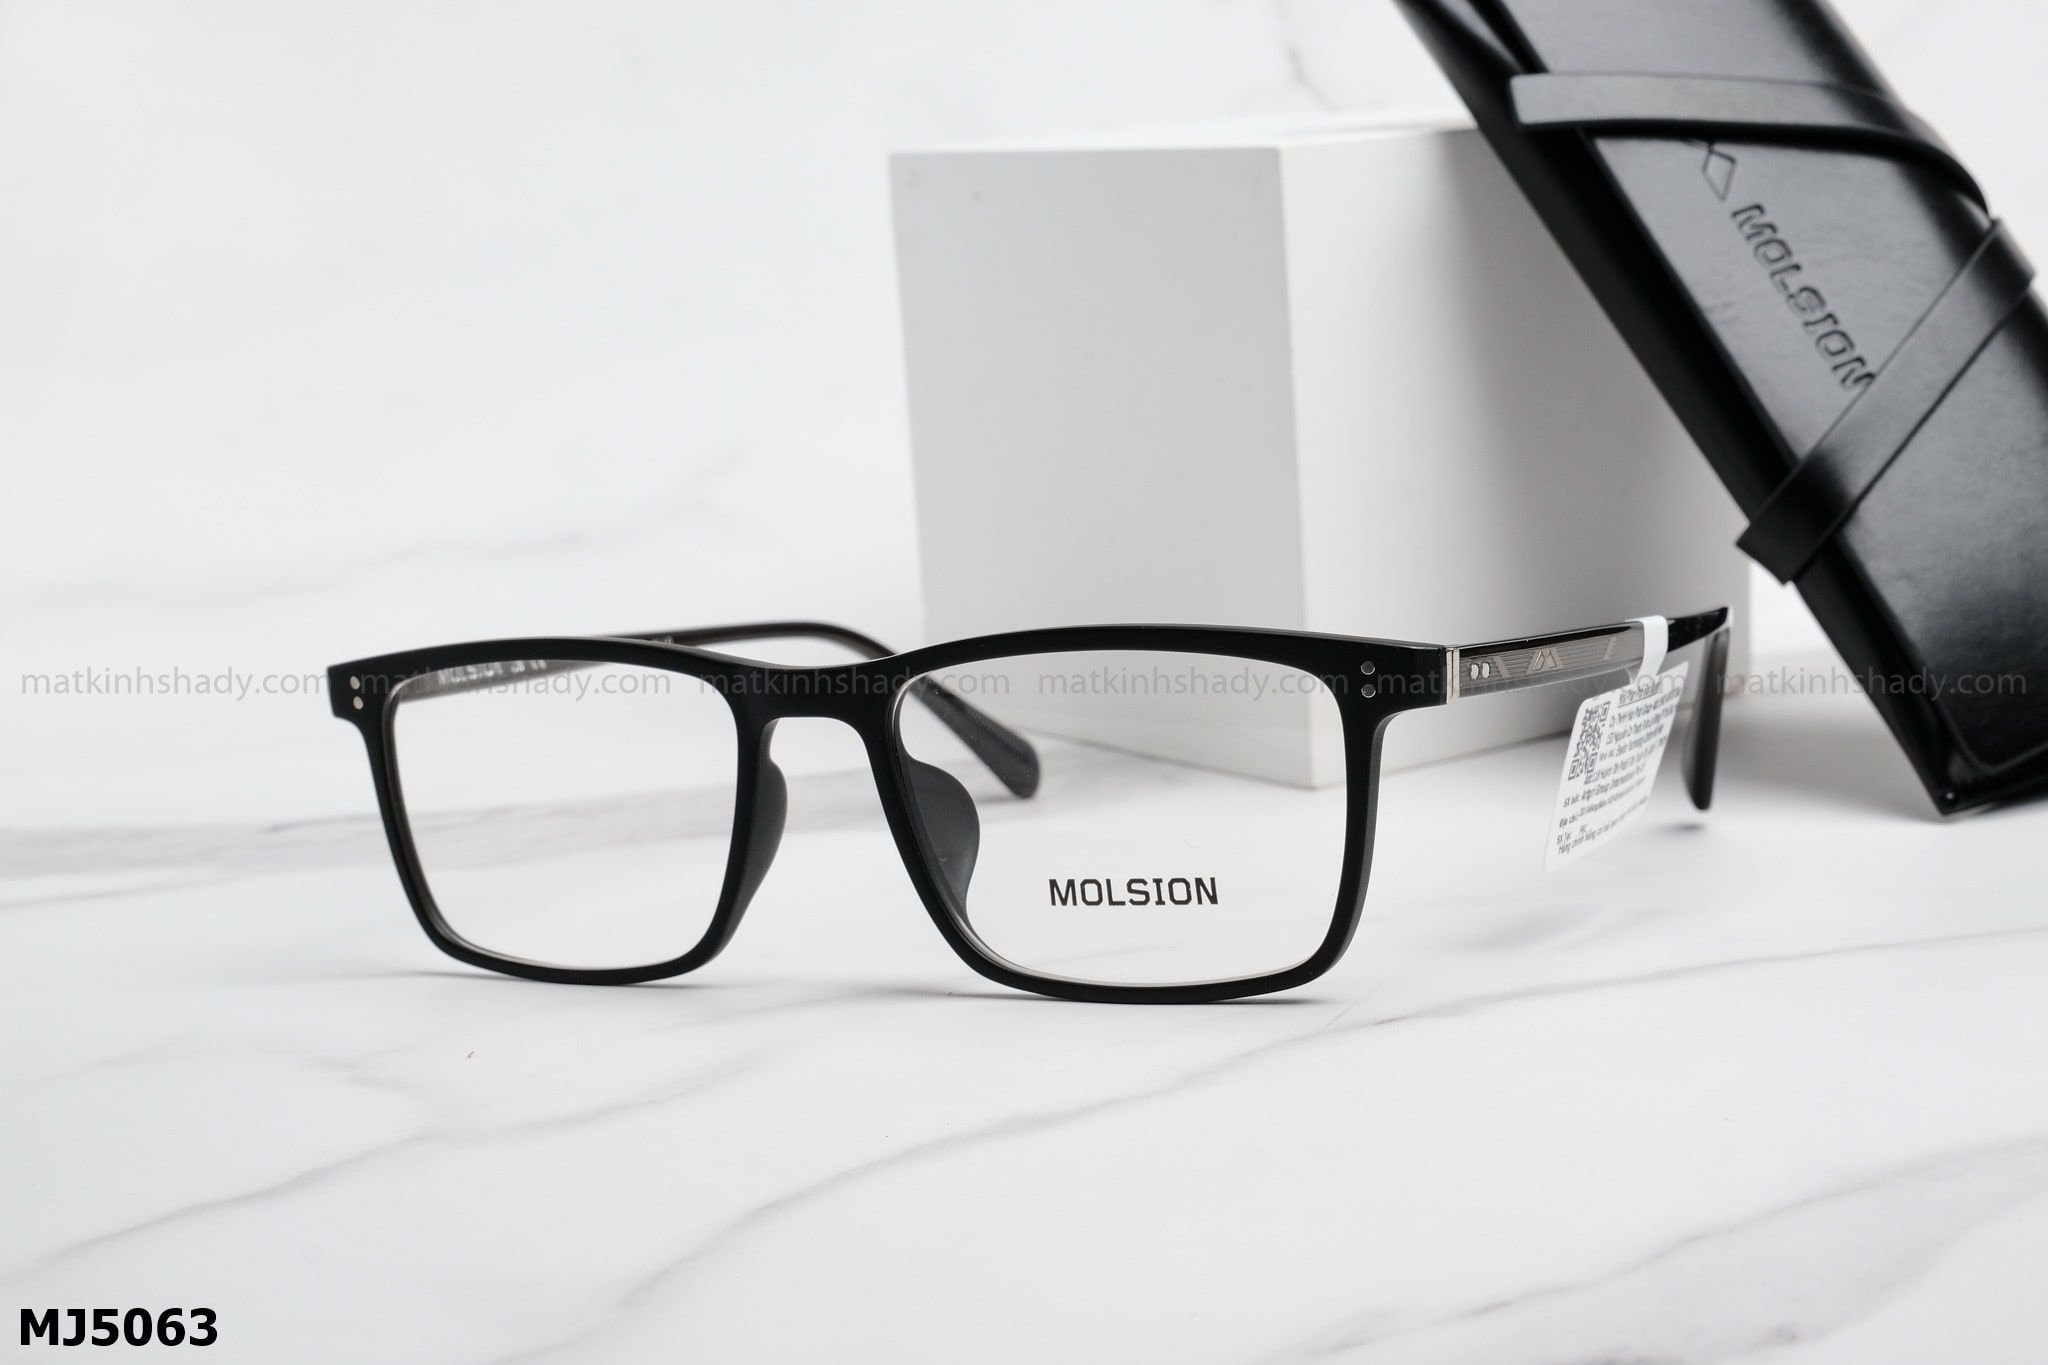  Molsion Eyewear - Glasses - MJ5063 